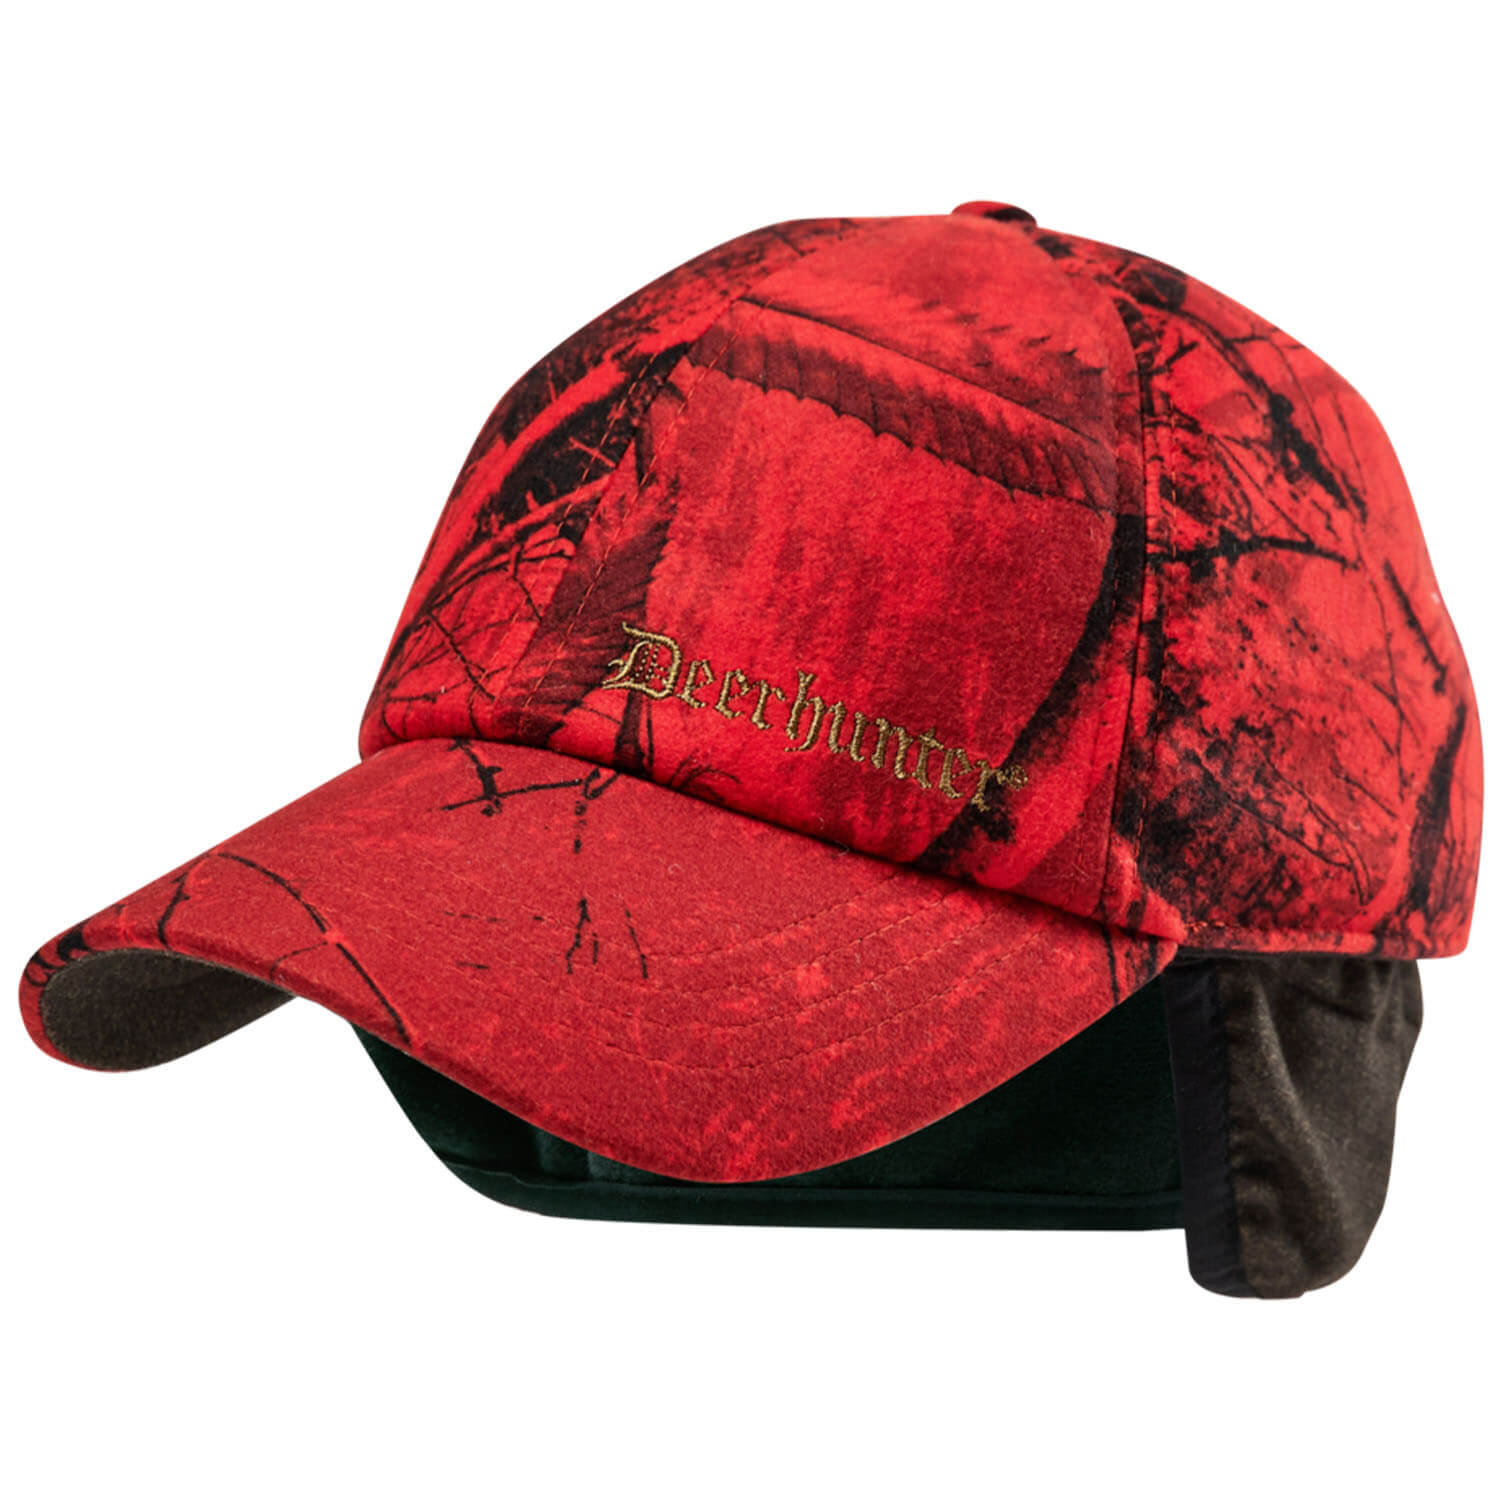 Deerhunter Cap Ram Arctici (Realtree Edge red) - Beanies & Caps